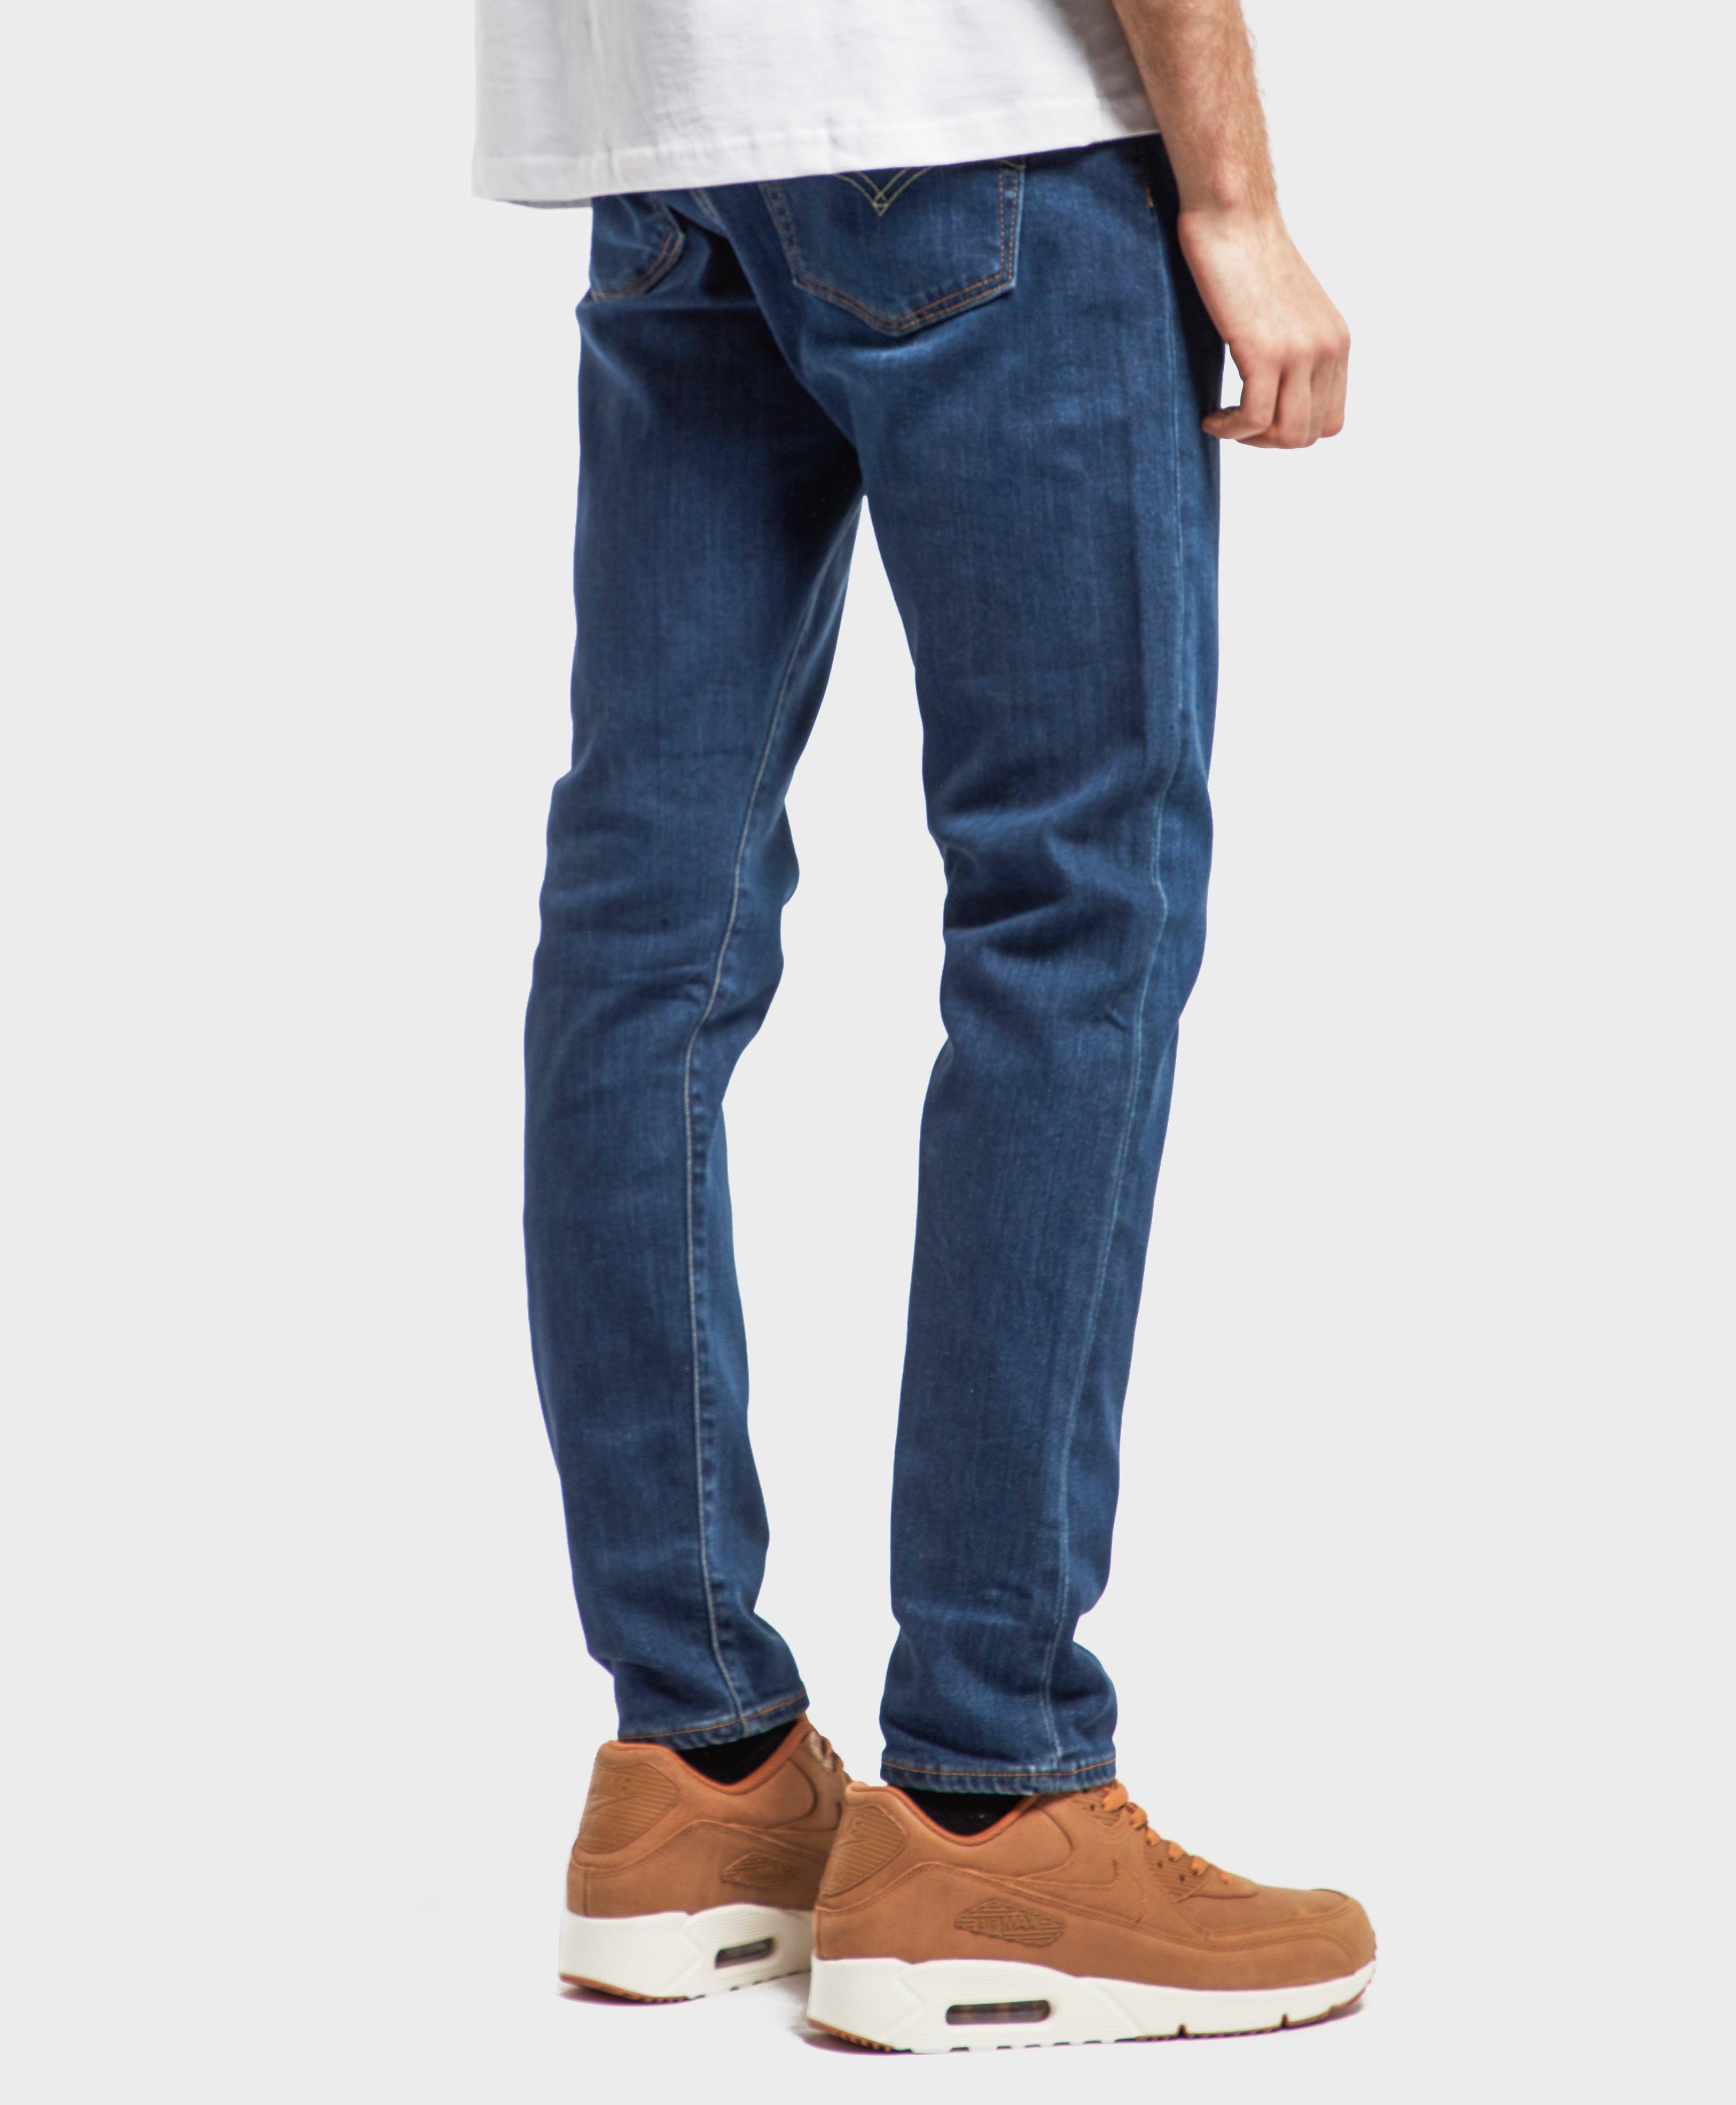 Levi's 510 Skinny Jeans in Blue for Men - Lyst